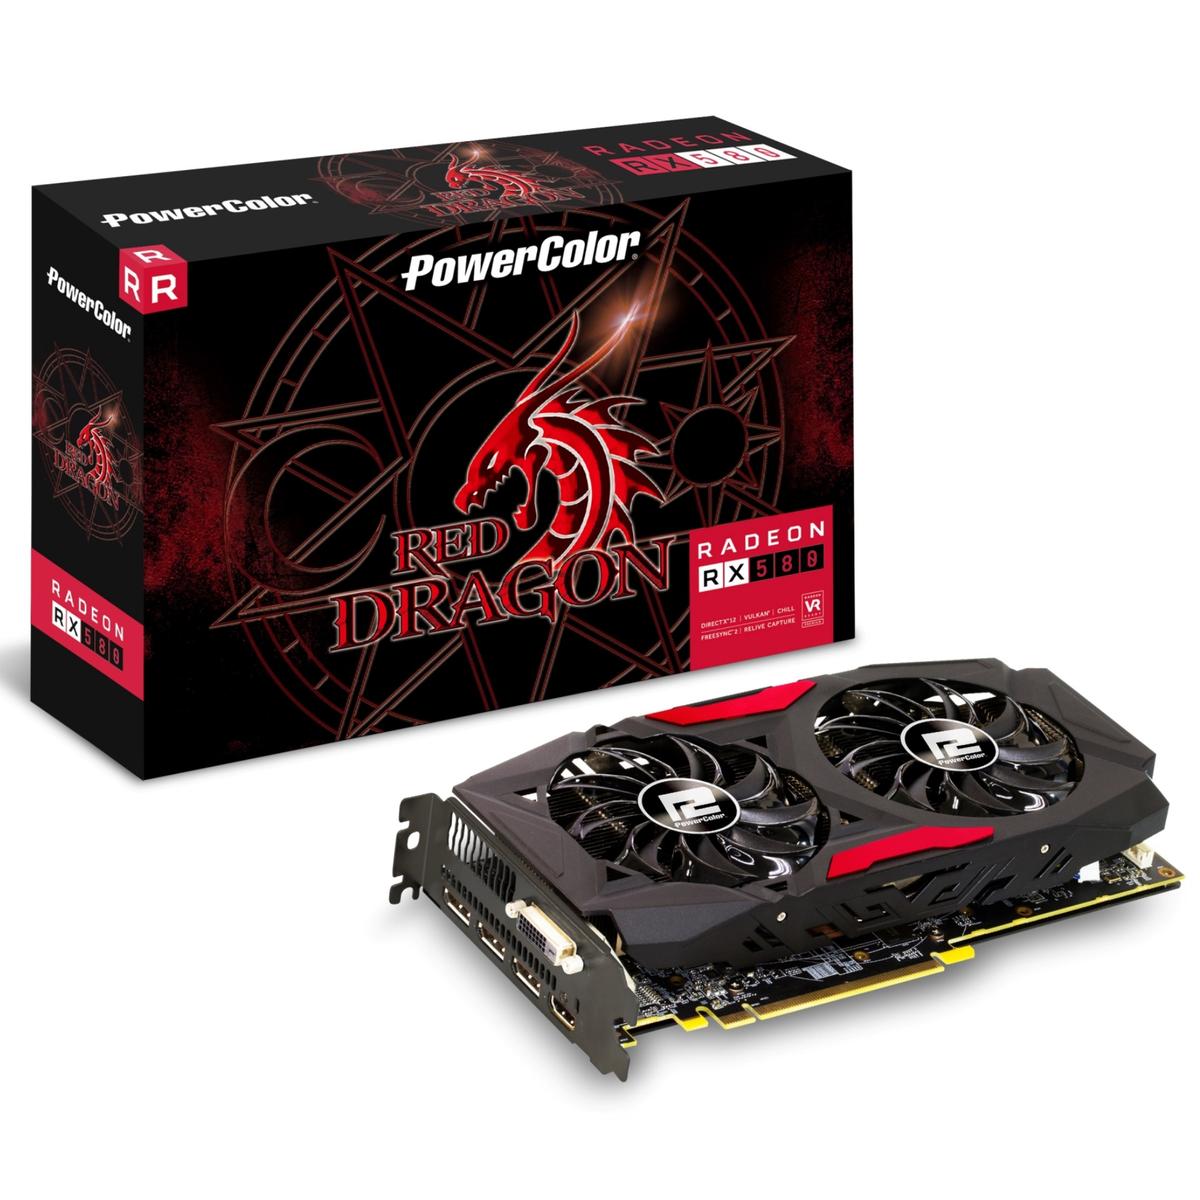 PowerColor Radeon RX 580 8 GB Red Dragon